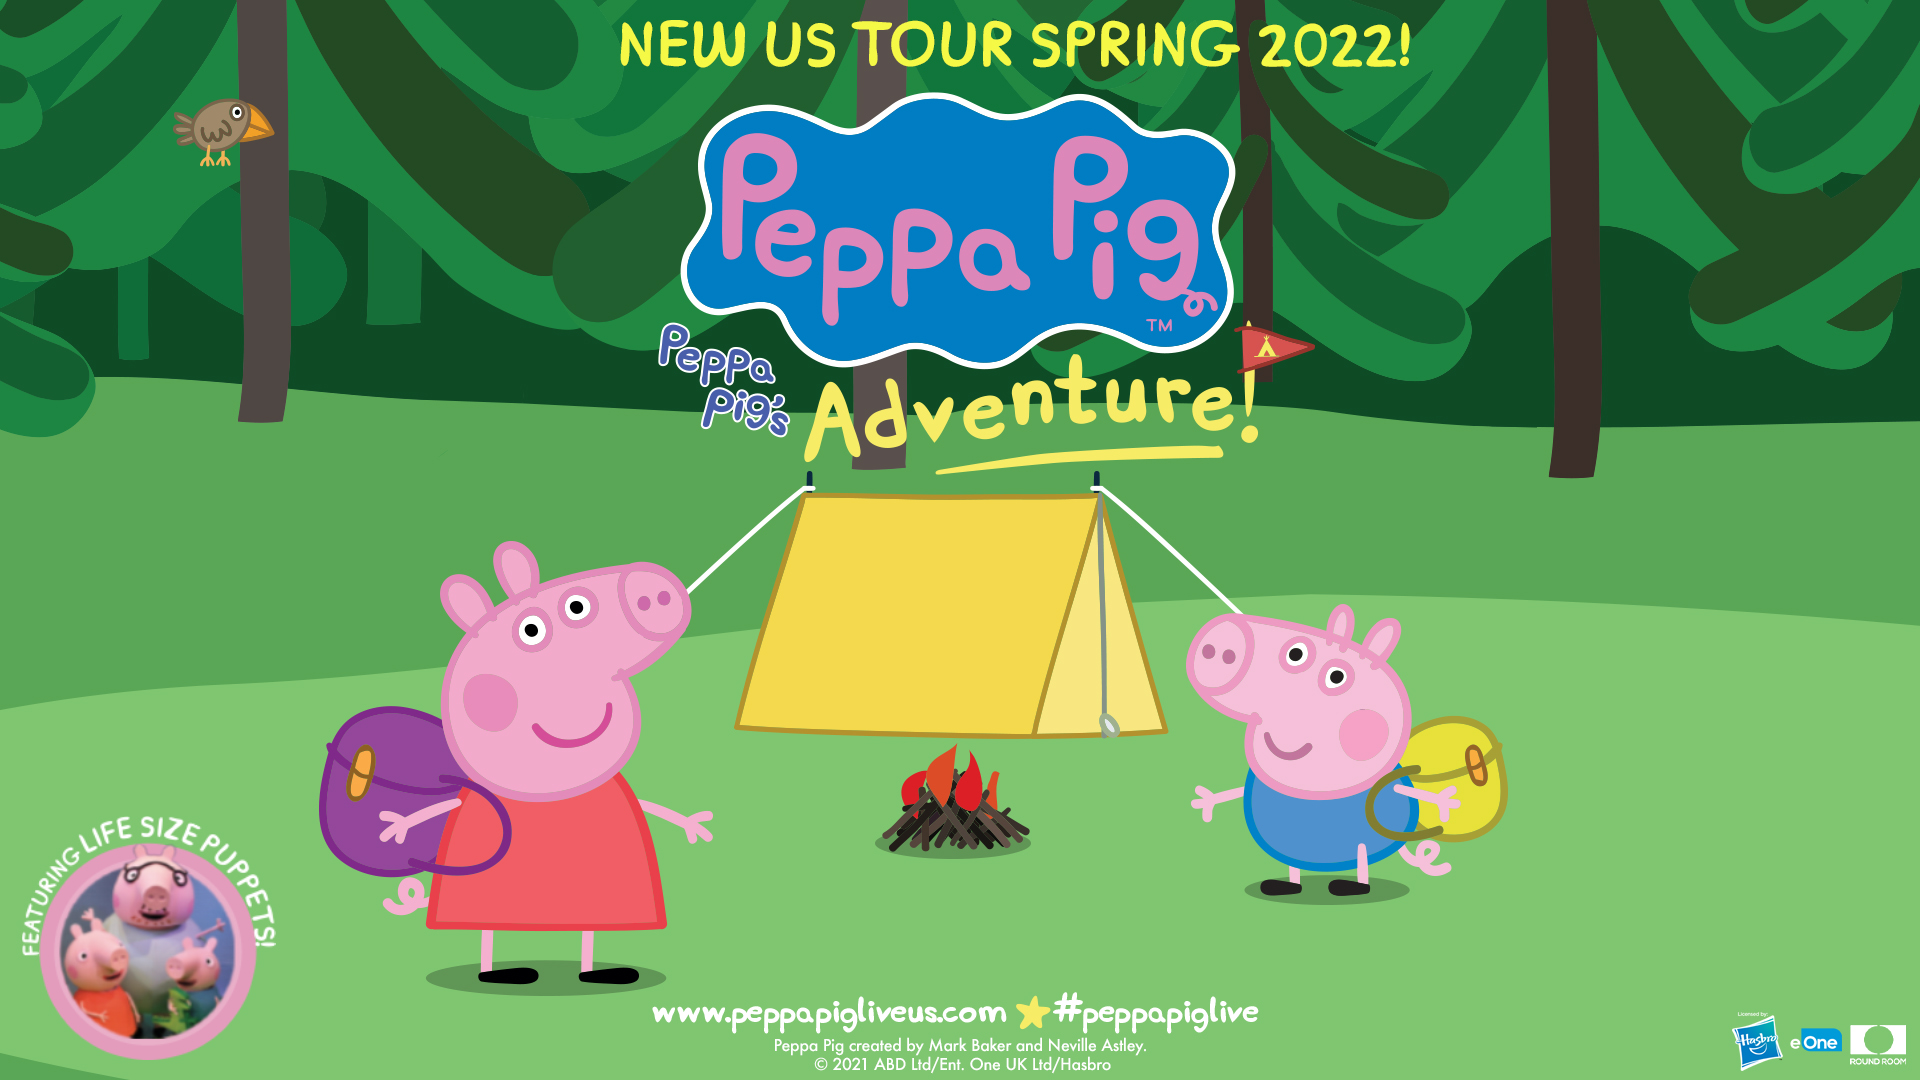 Peppa Pig 2019 Year Wallpapers